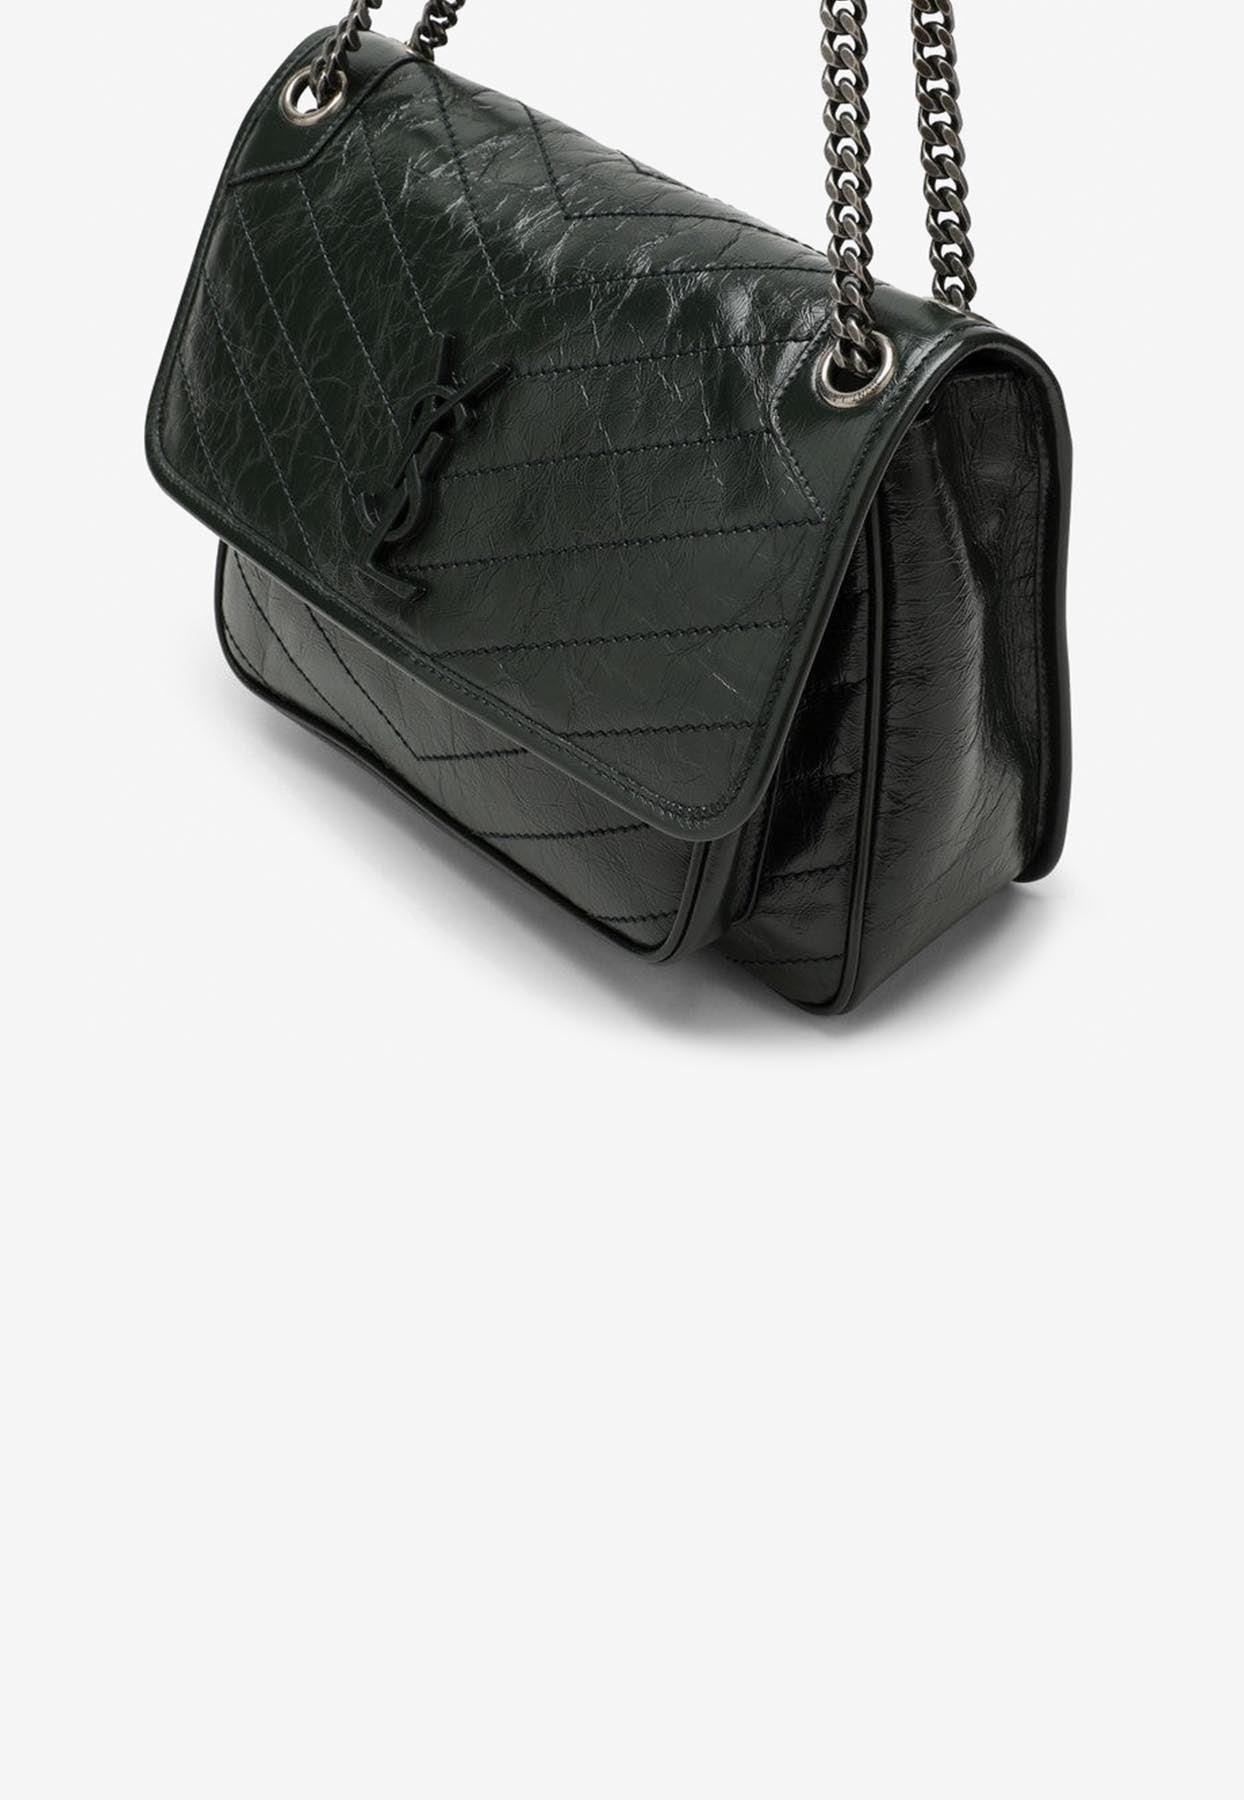 Saint Laurent Medium Niki Leather Shoulder Bag